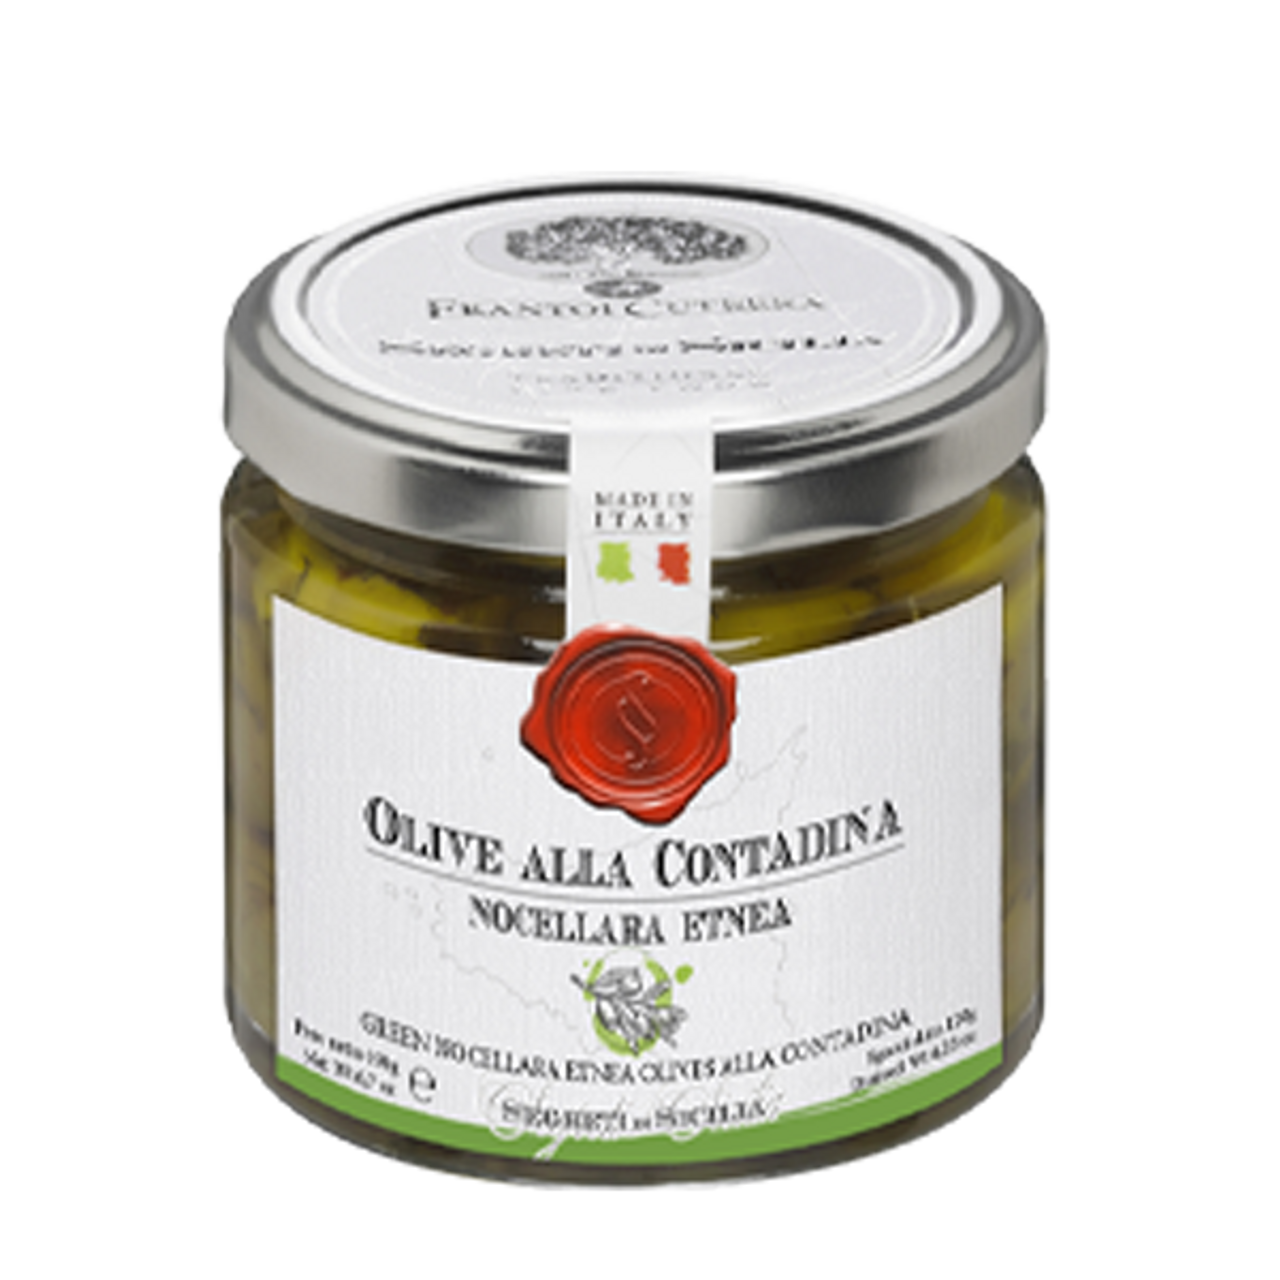 Cutrera Olives alla Contadina - Green Olives with Herbs CUT-J043